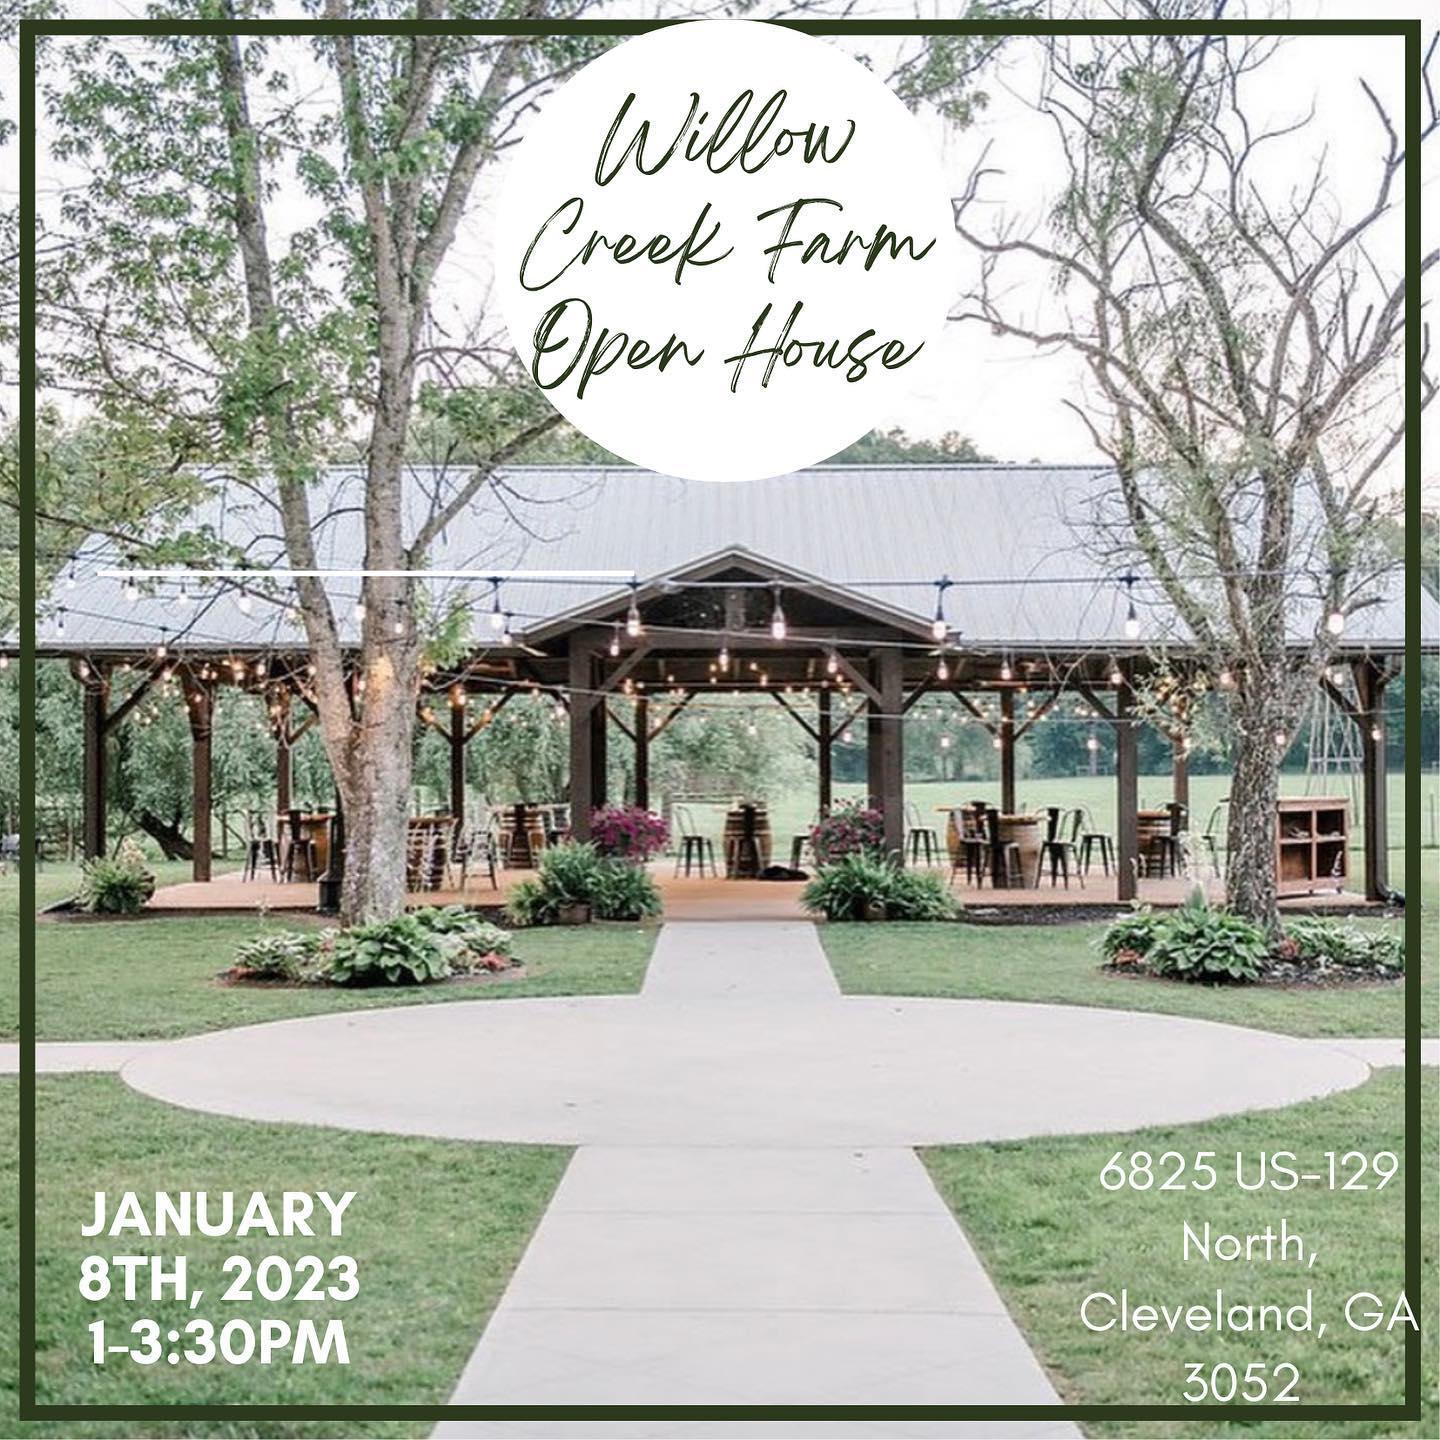 Willow Creek Farm Open House - January 2023